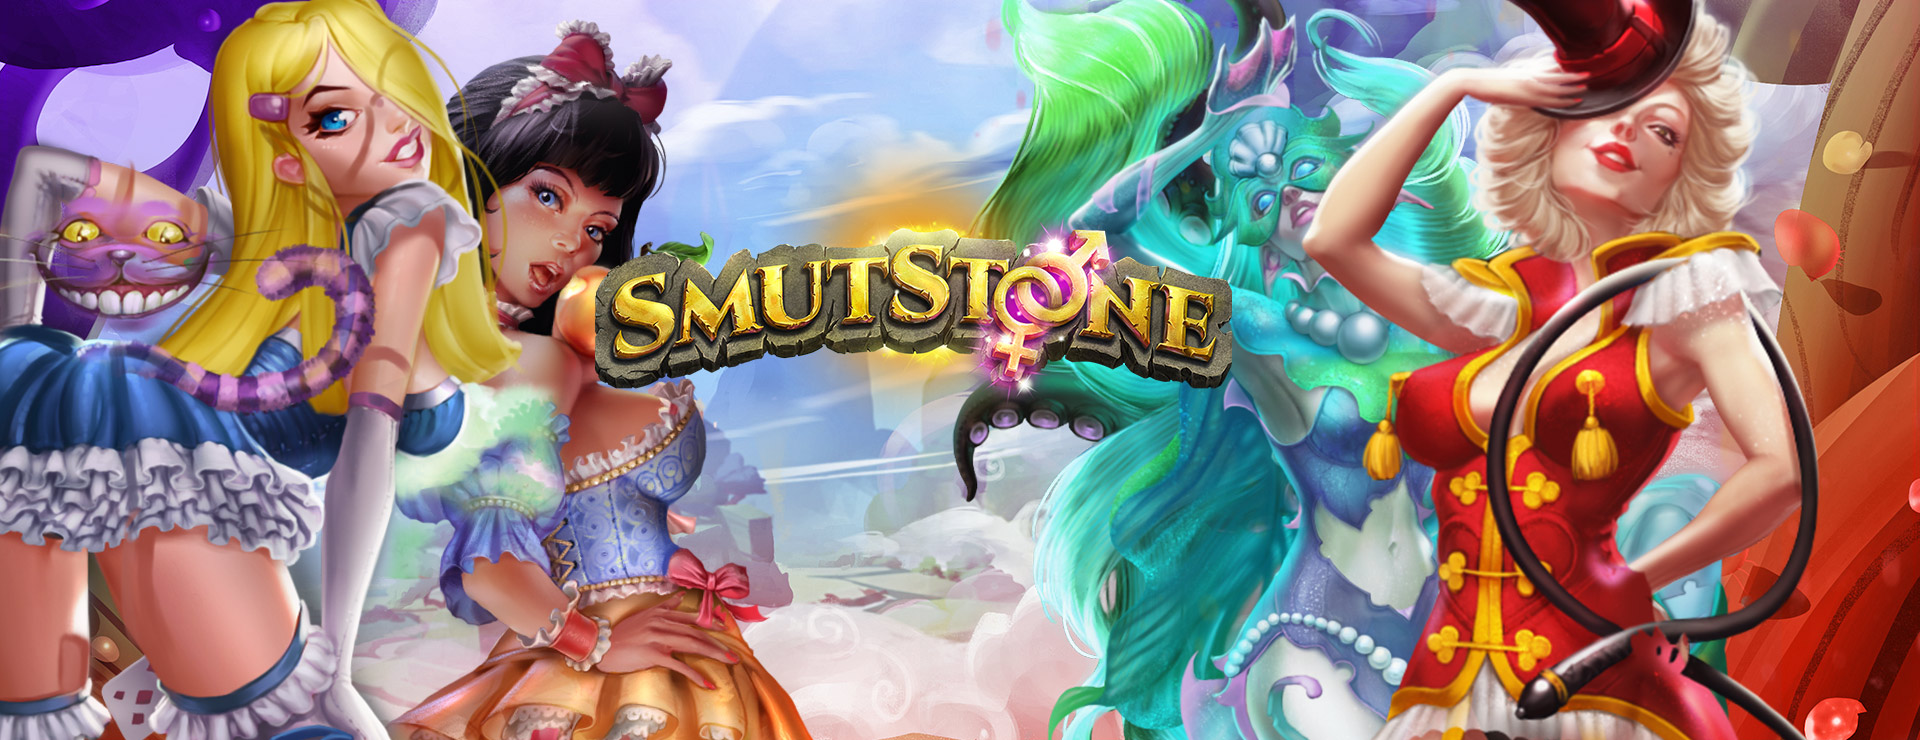 Smutstone Game - Novela Visual Juego